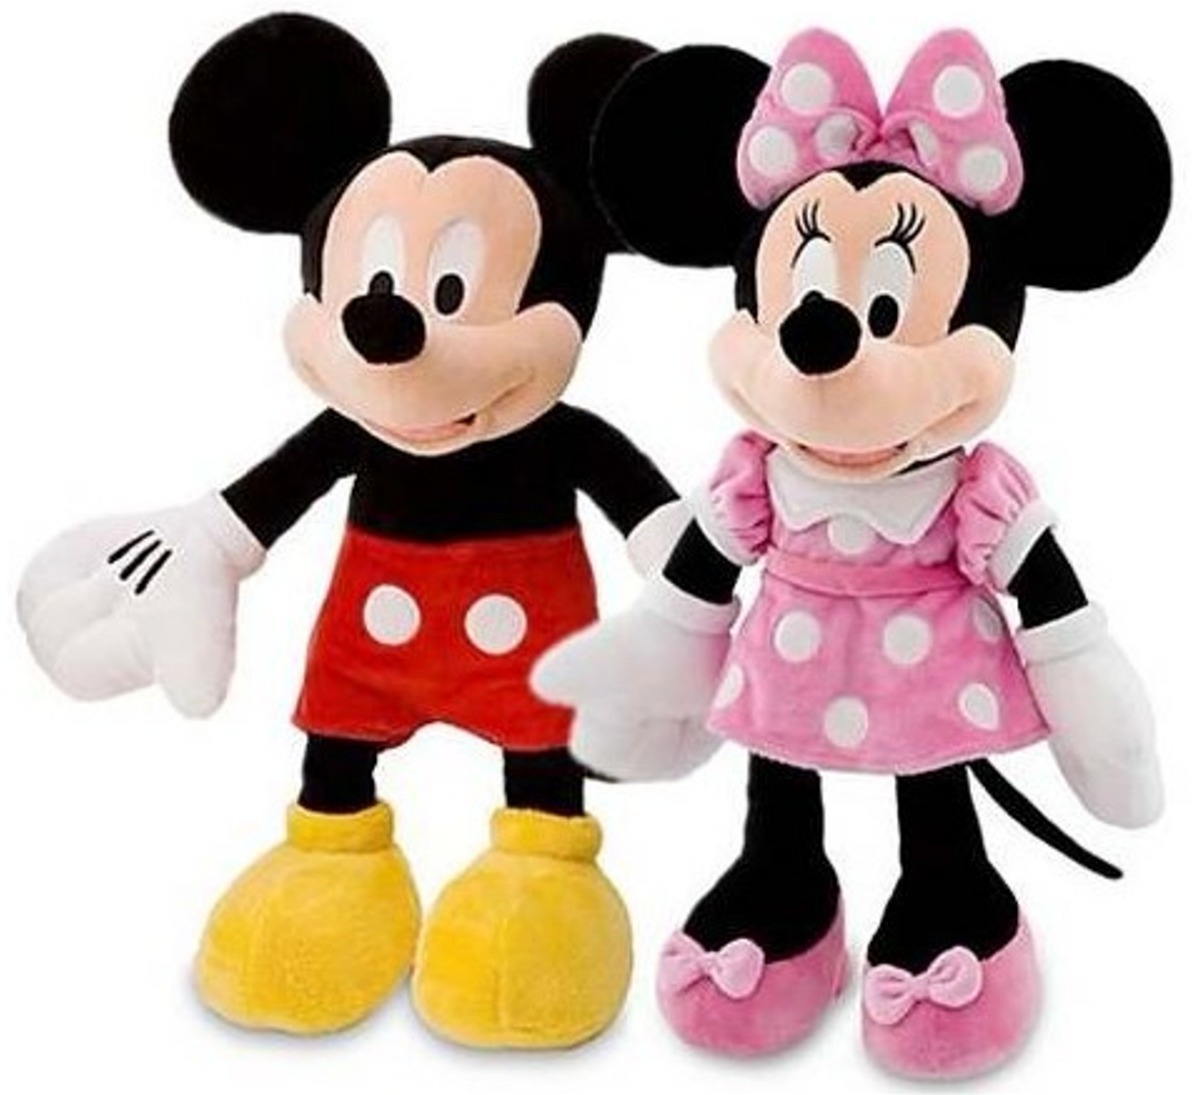 Игрушка минни. Микки Минни игрушка. Игрушка Минни Маус Дисней. Minnie Mouse Disney игрушка. Минни Маус игрушка мягкая Disney.